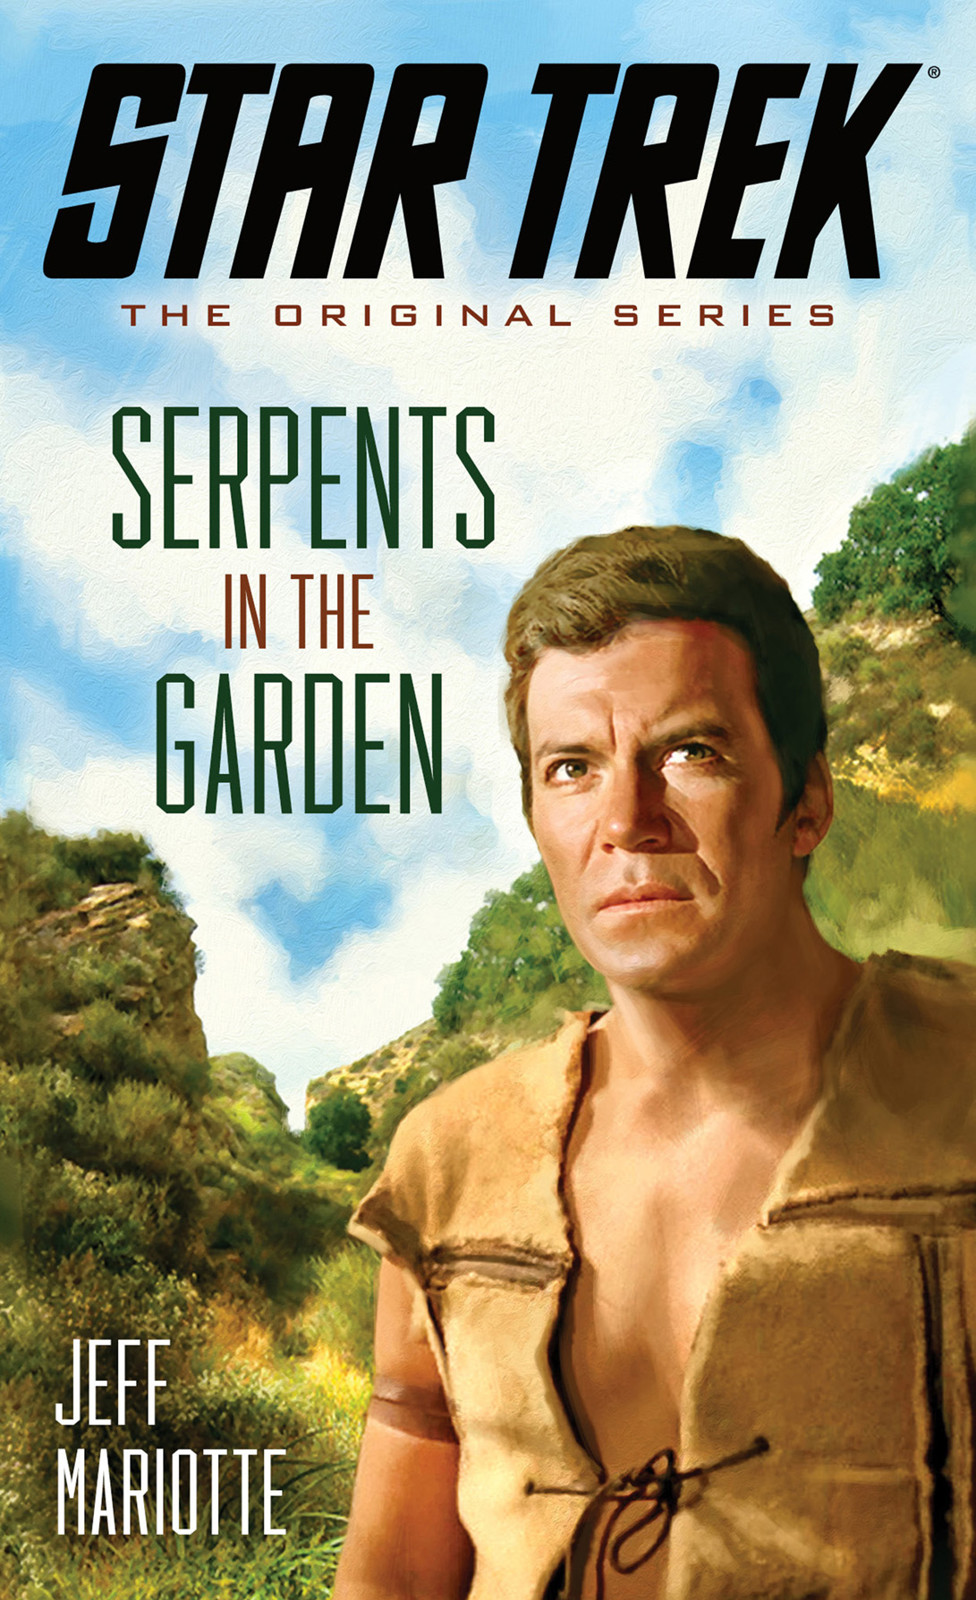 Star Trek: The Original Series - 158 - Serpents in the Garden